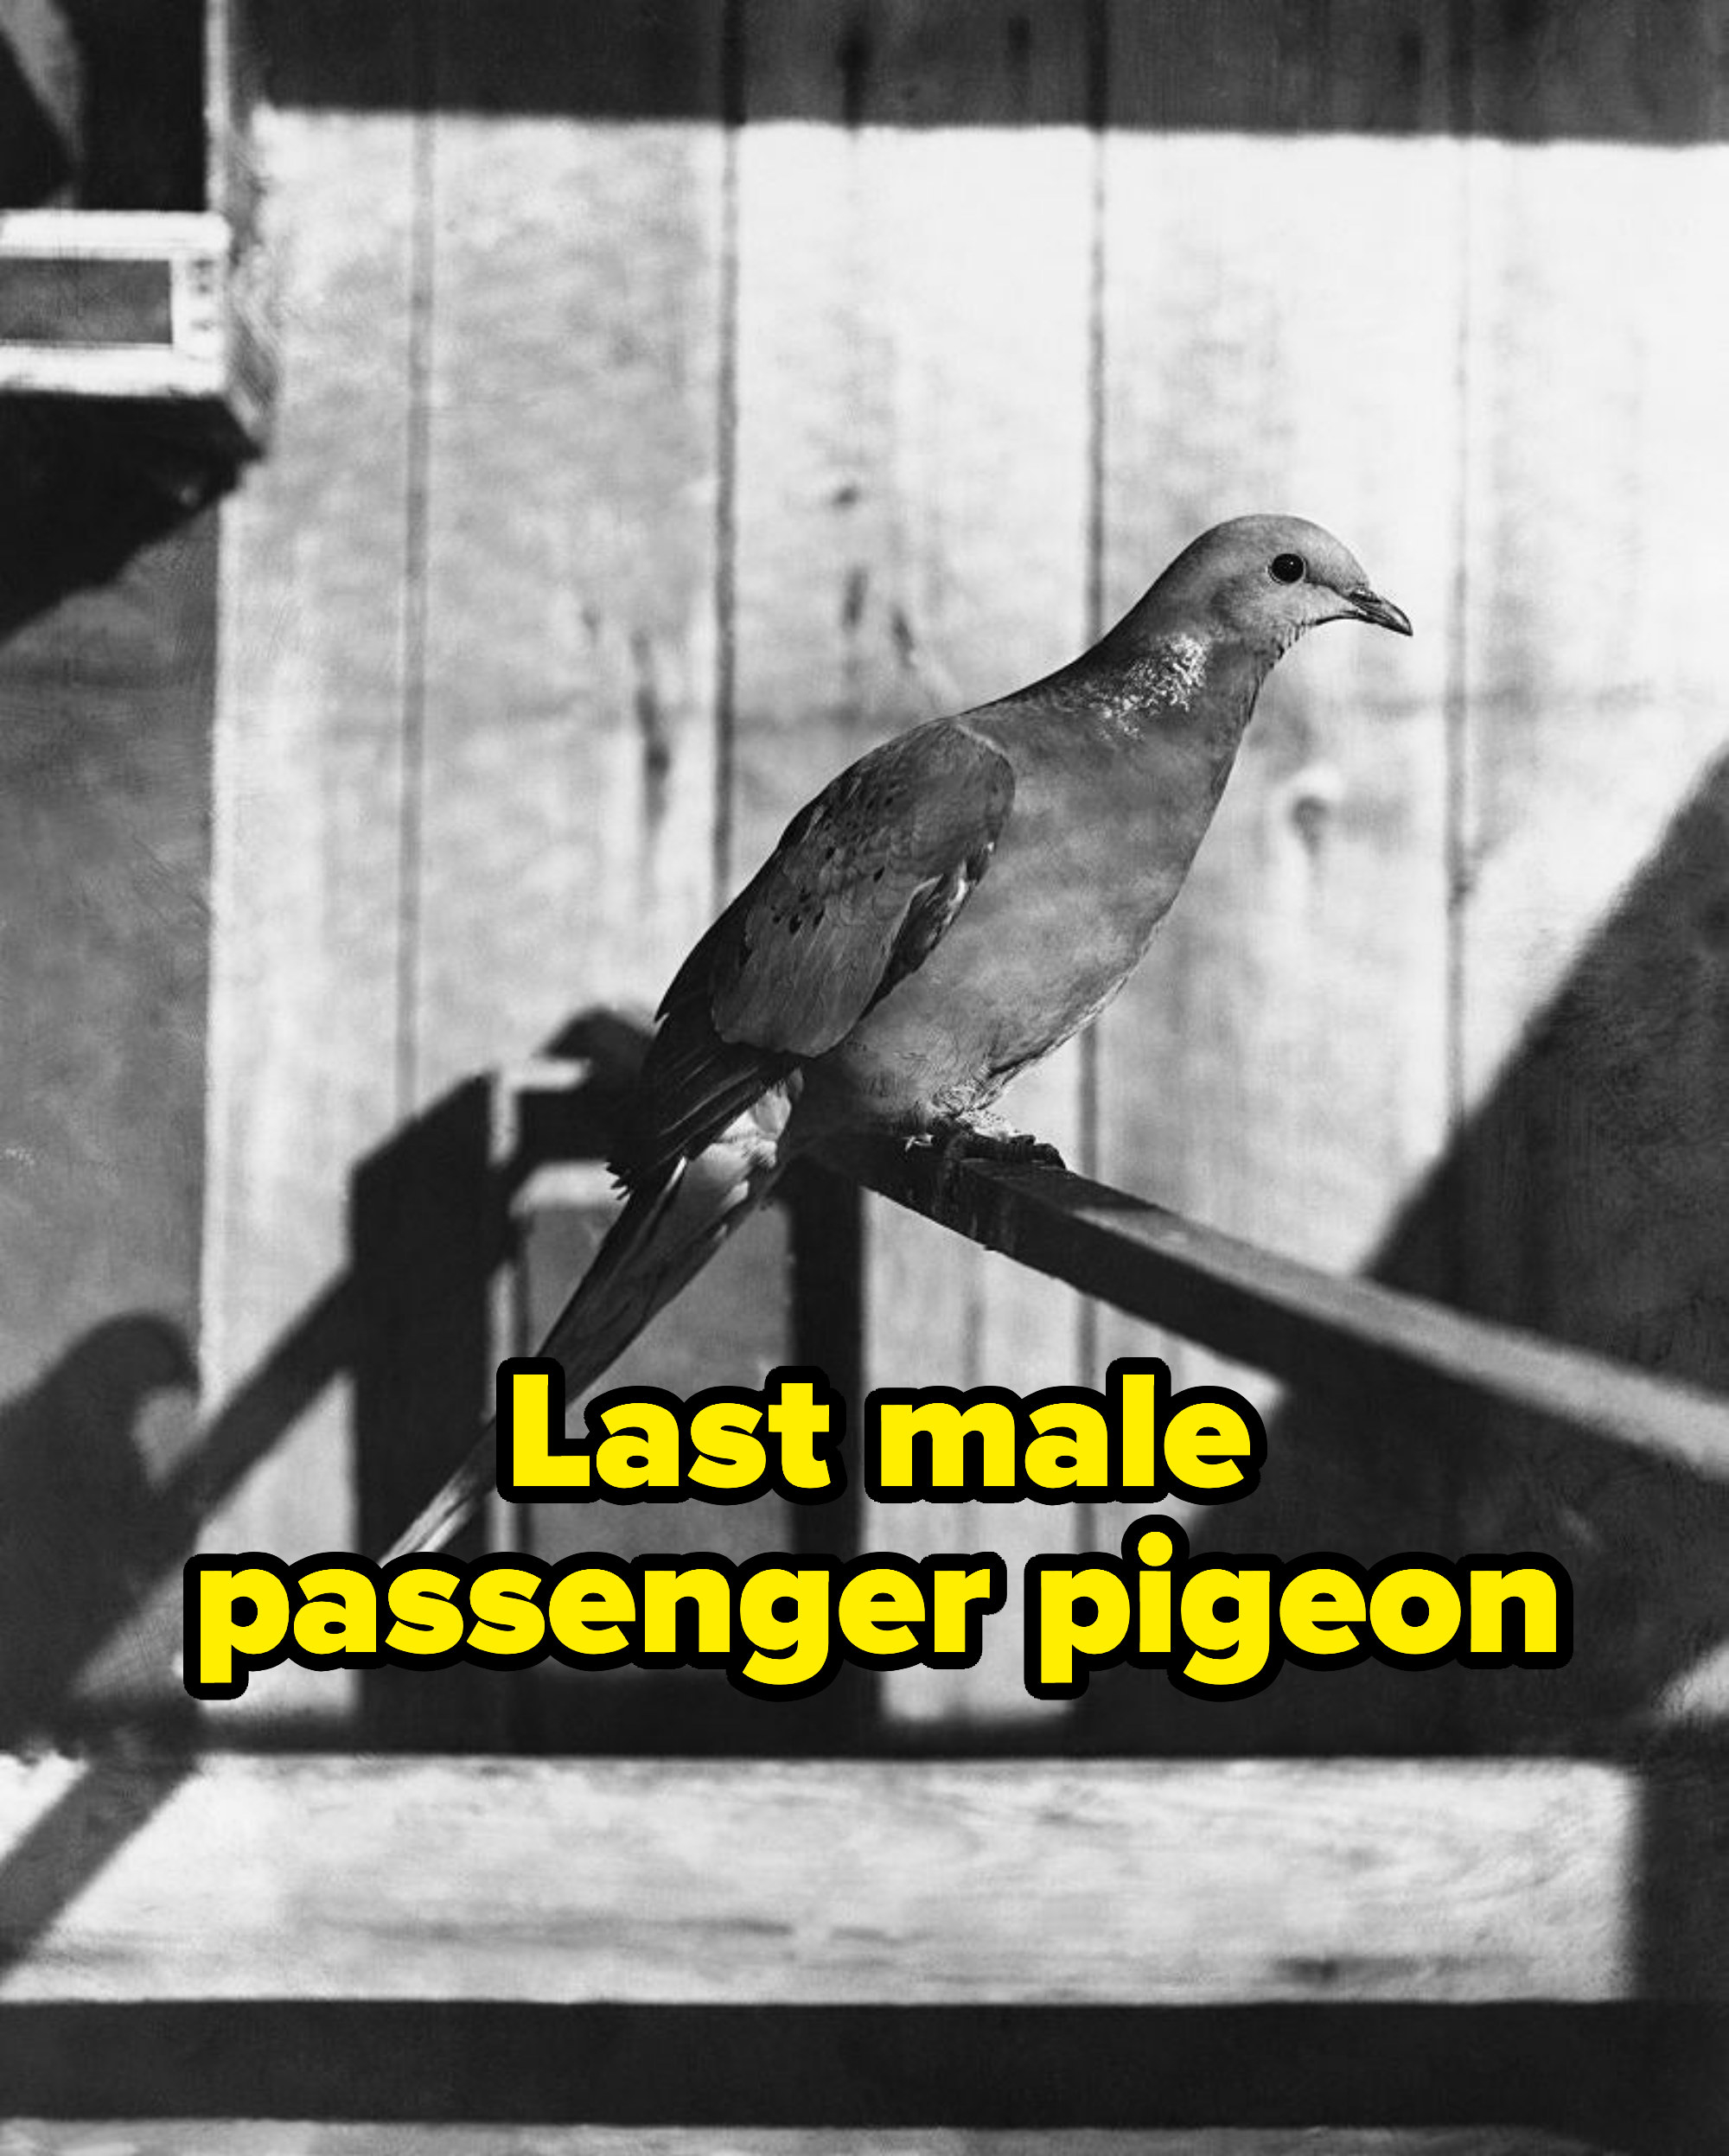 The last male passenger pigeon